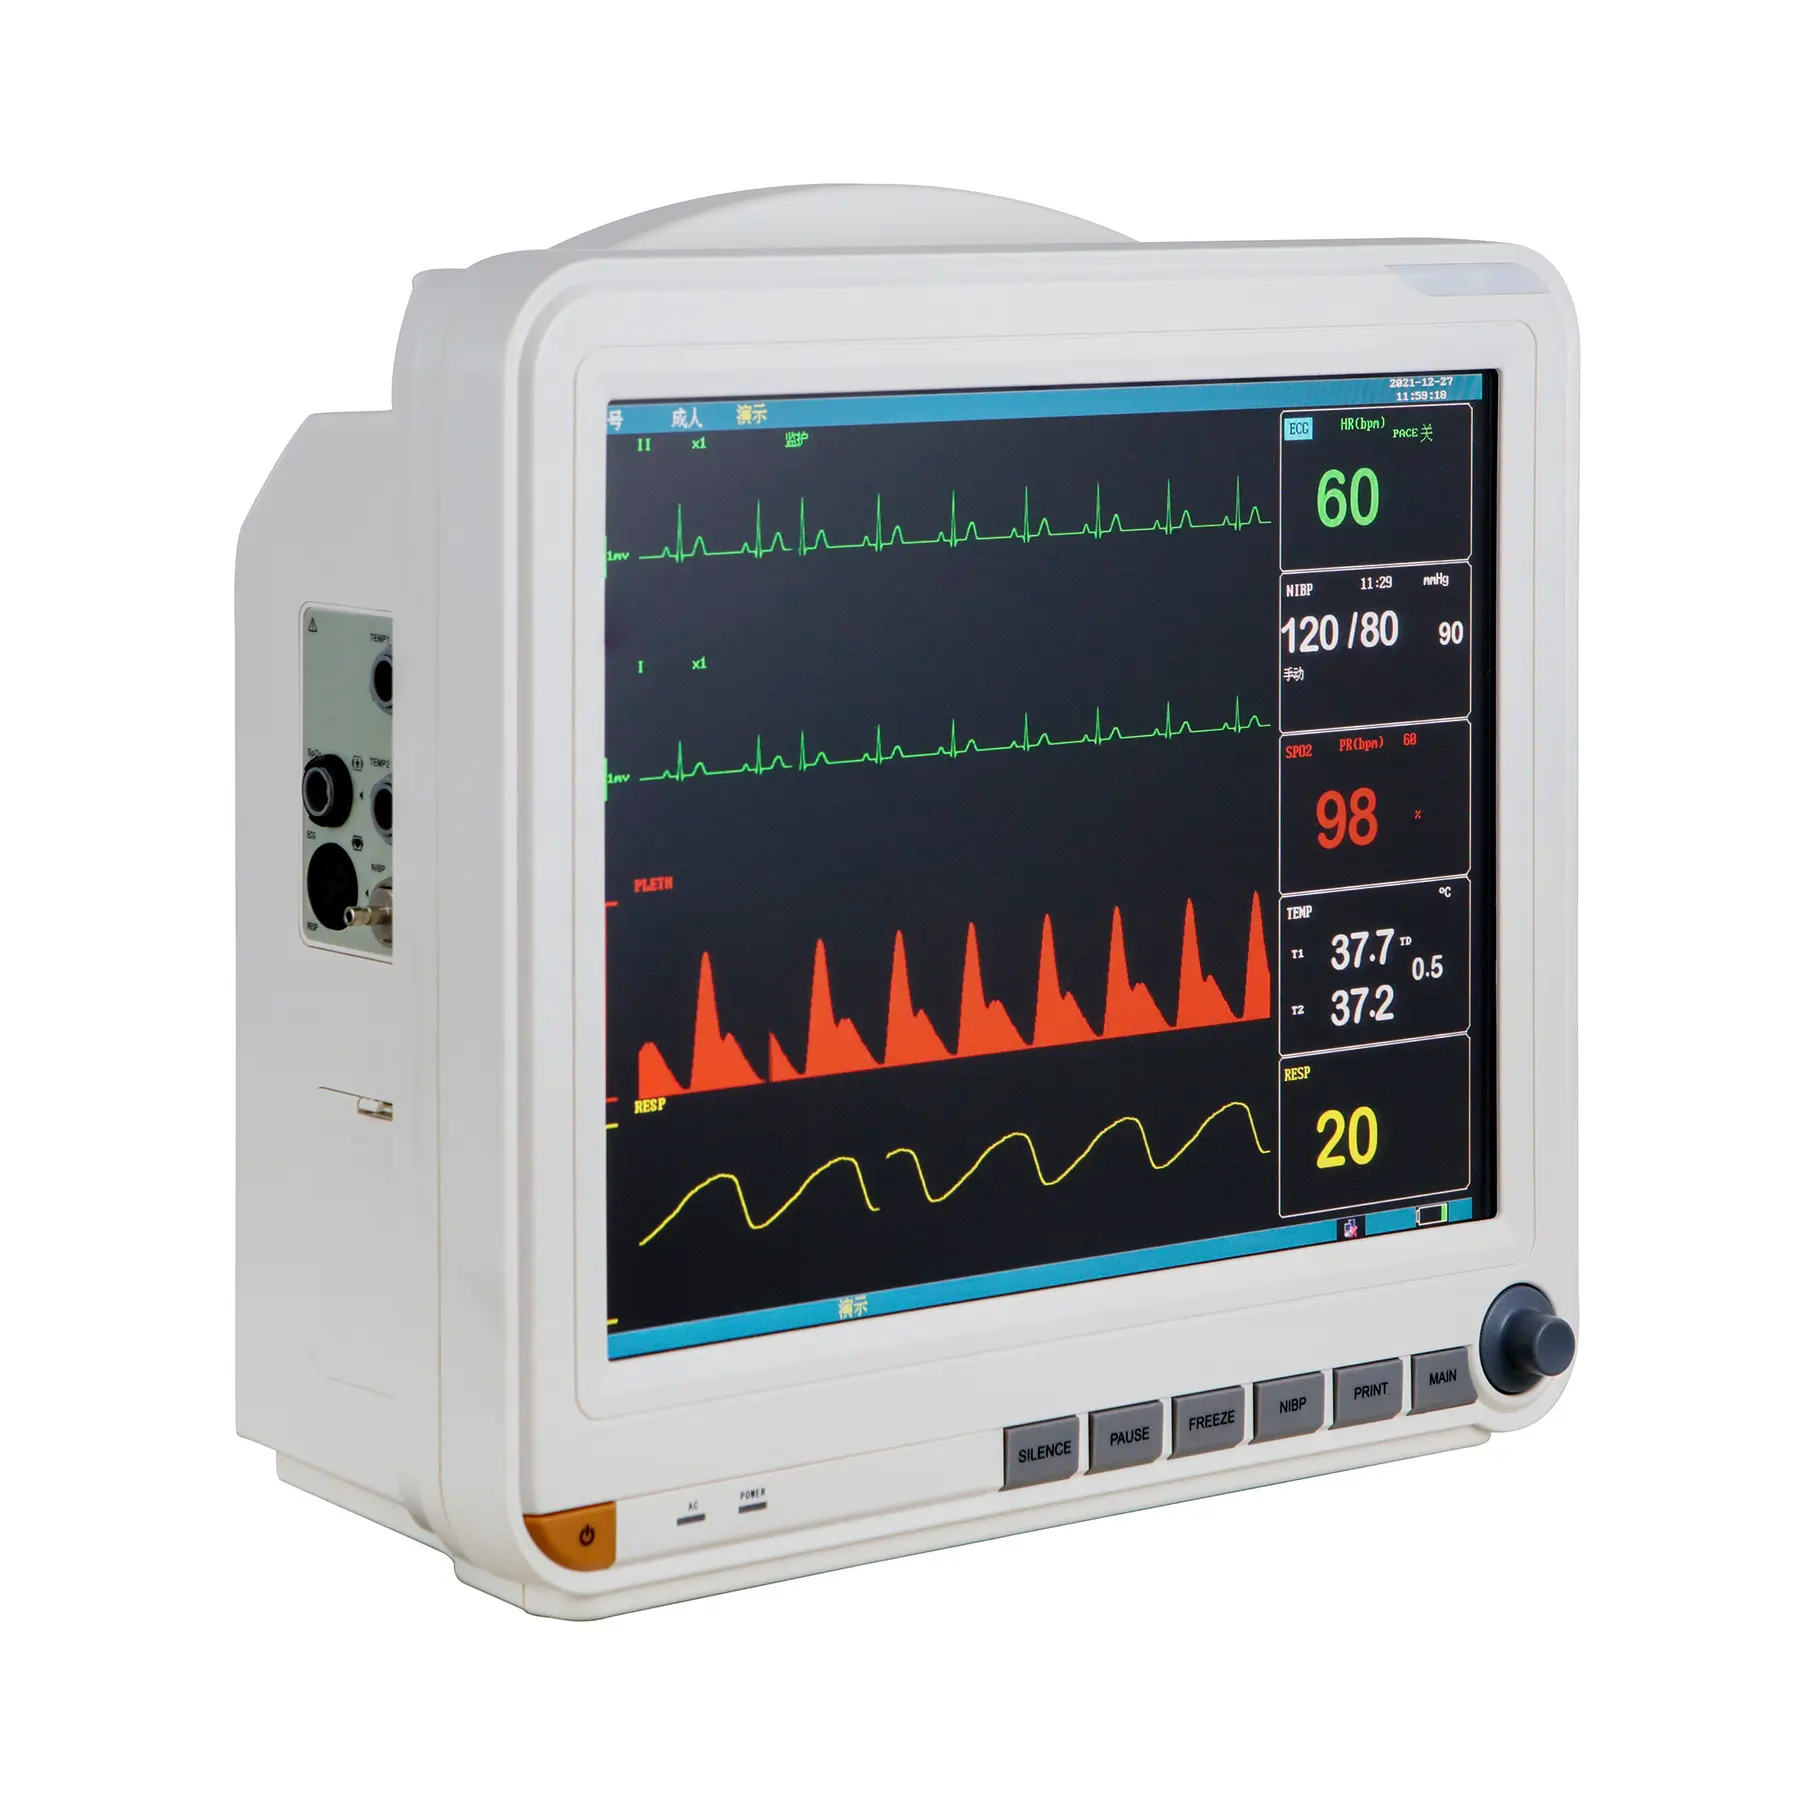 BJHRD ICU monitor medical equipment hospital vital signs portable multi-parameter multifunctional monitor